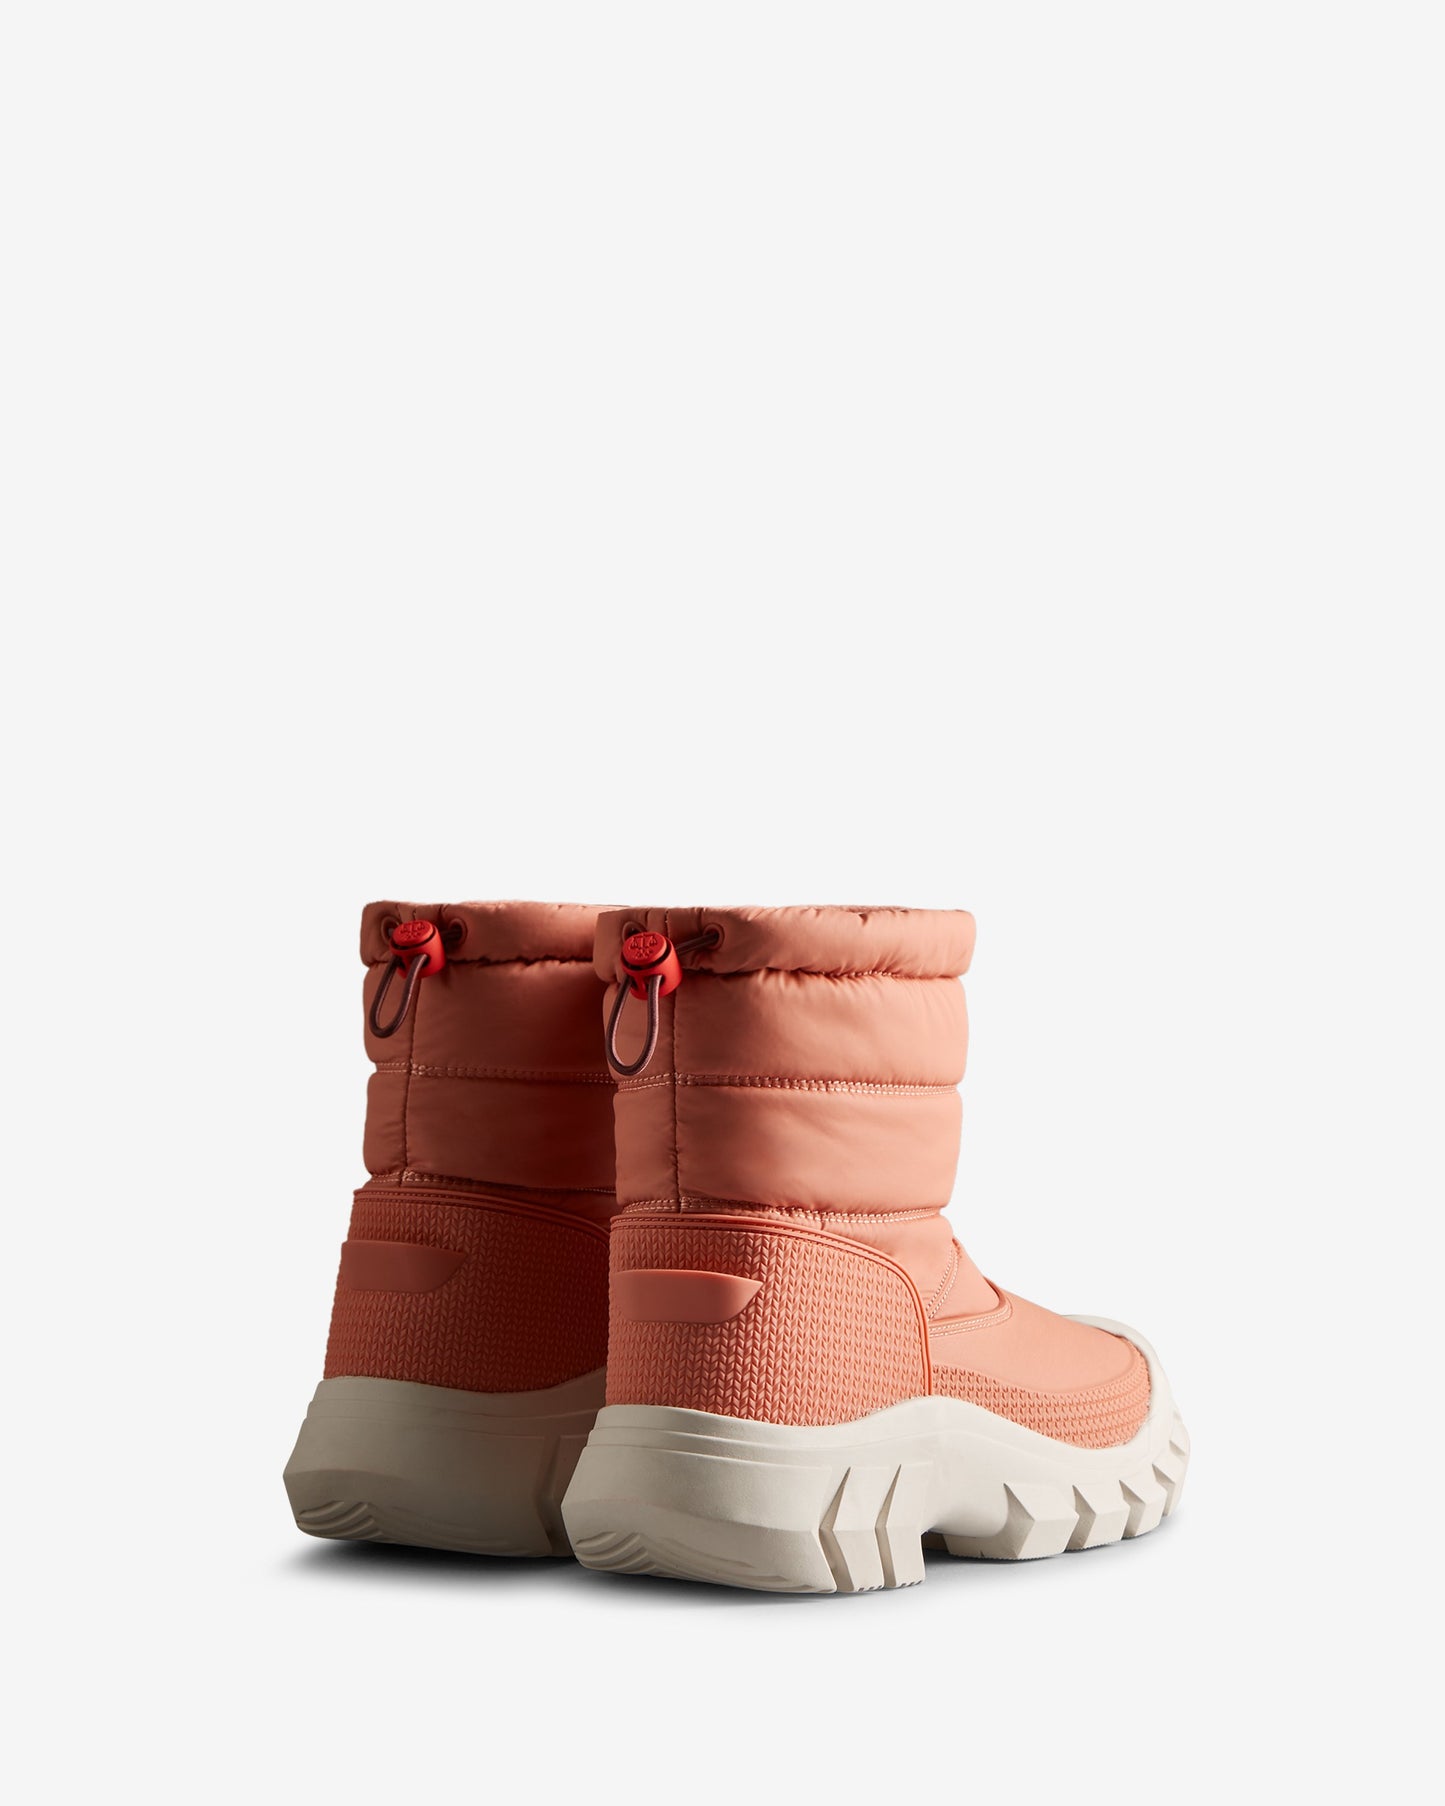 
                  
                    Hunter Women's Intrepid Insulated Short Snow Boots
                  
                